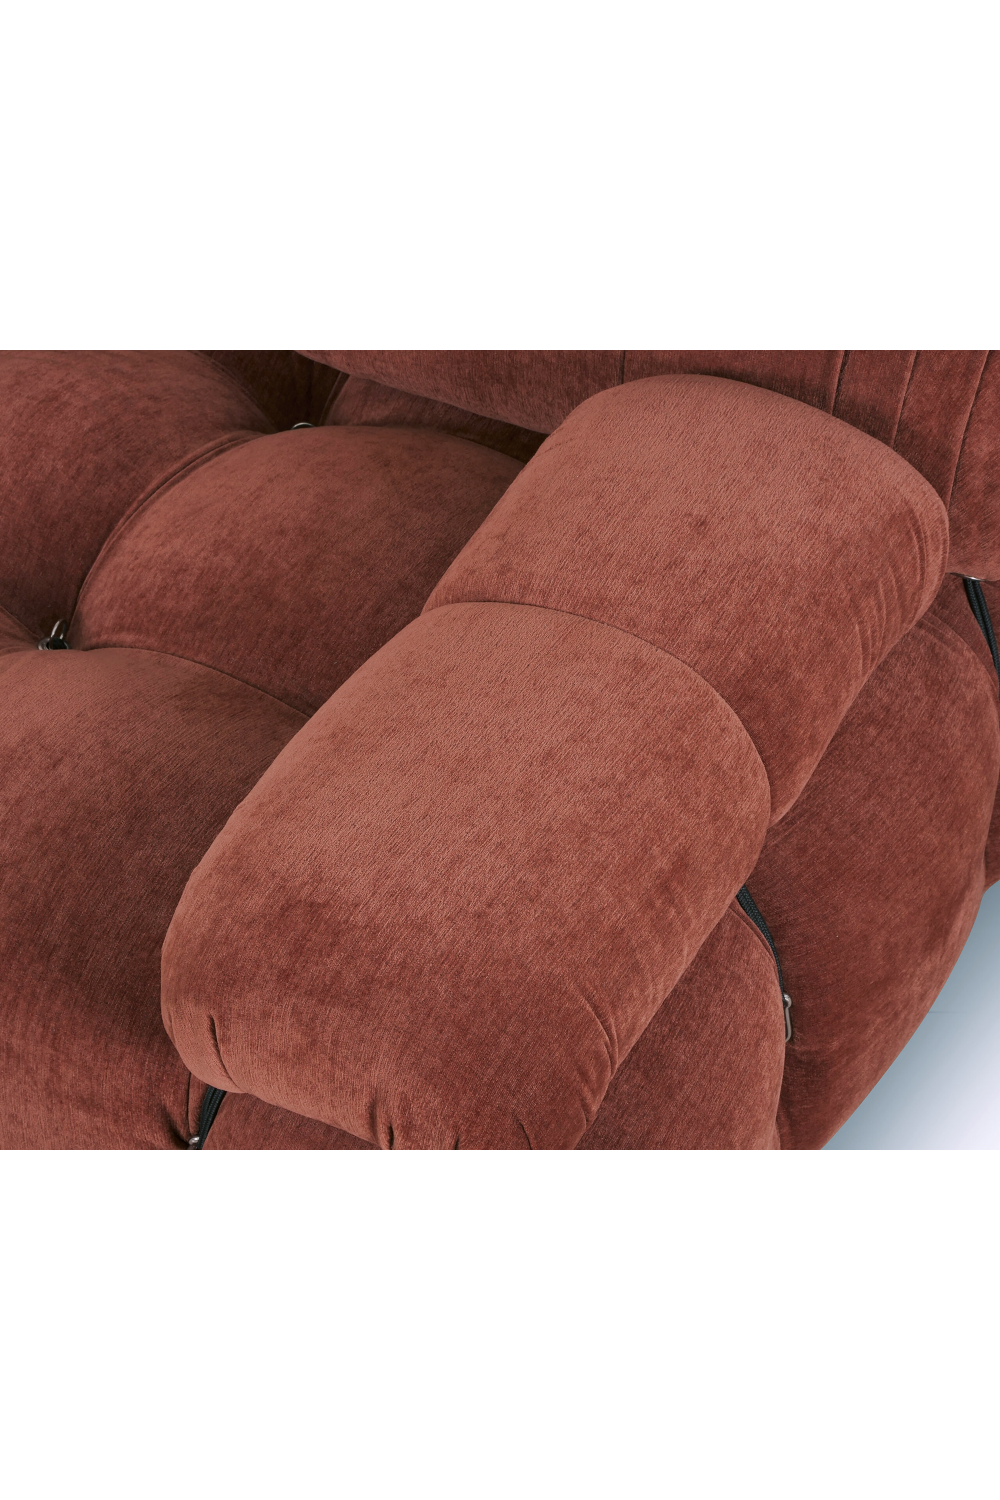 Rust-Colored Sectional Sofa | Liang & Eimil Combo | Oroa.com